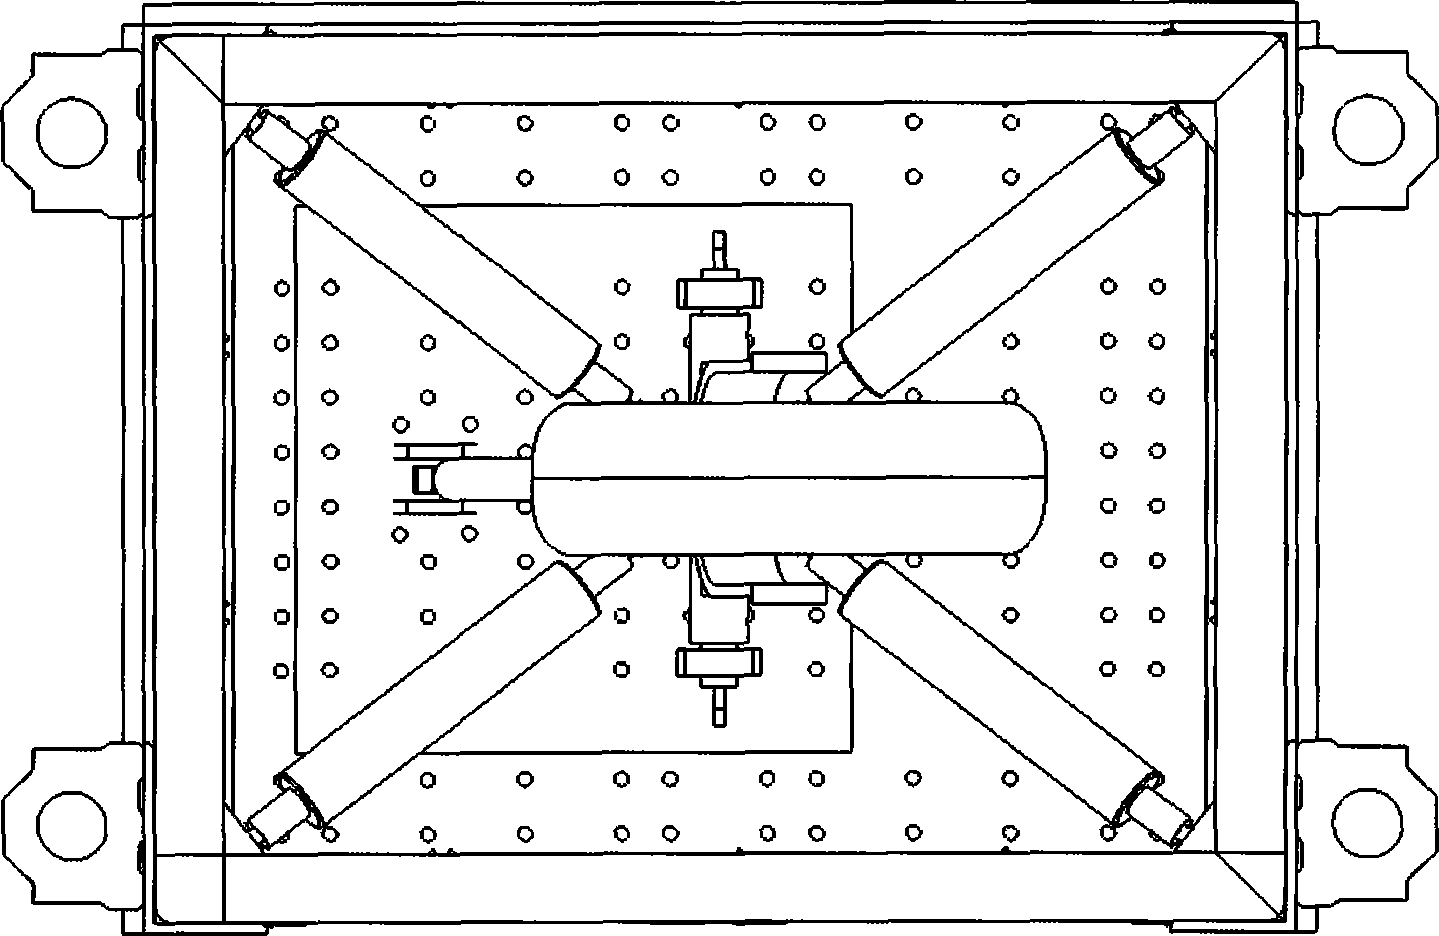 Inverted cup-type drop test bed cradle